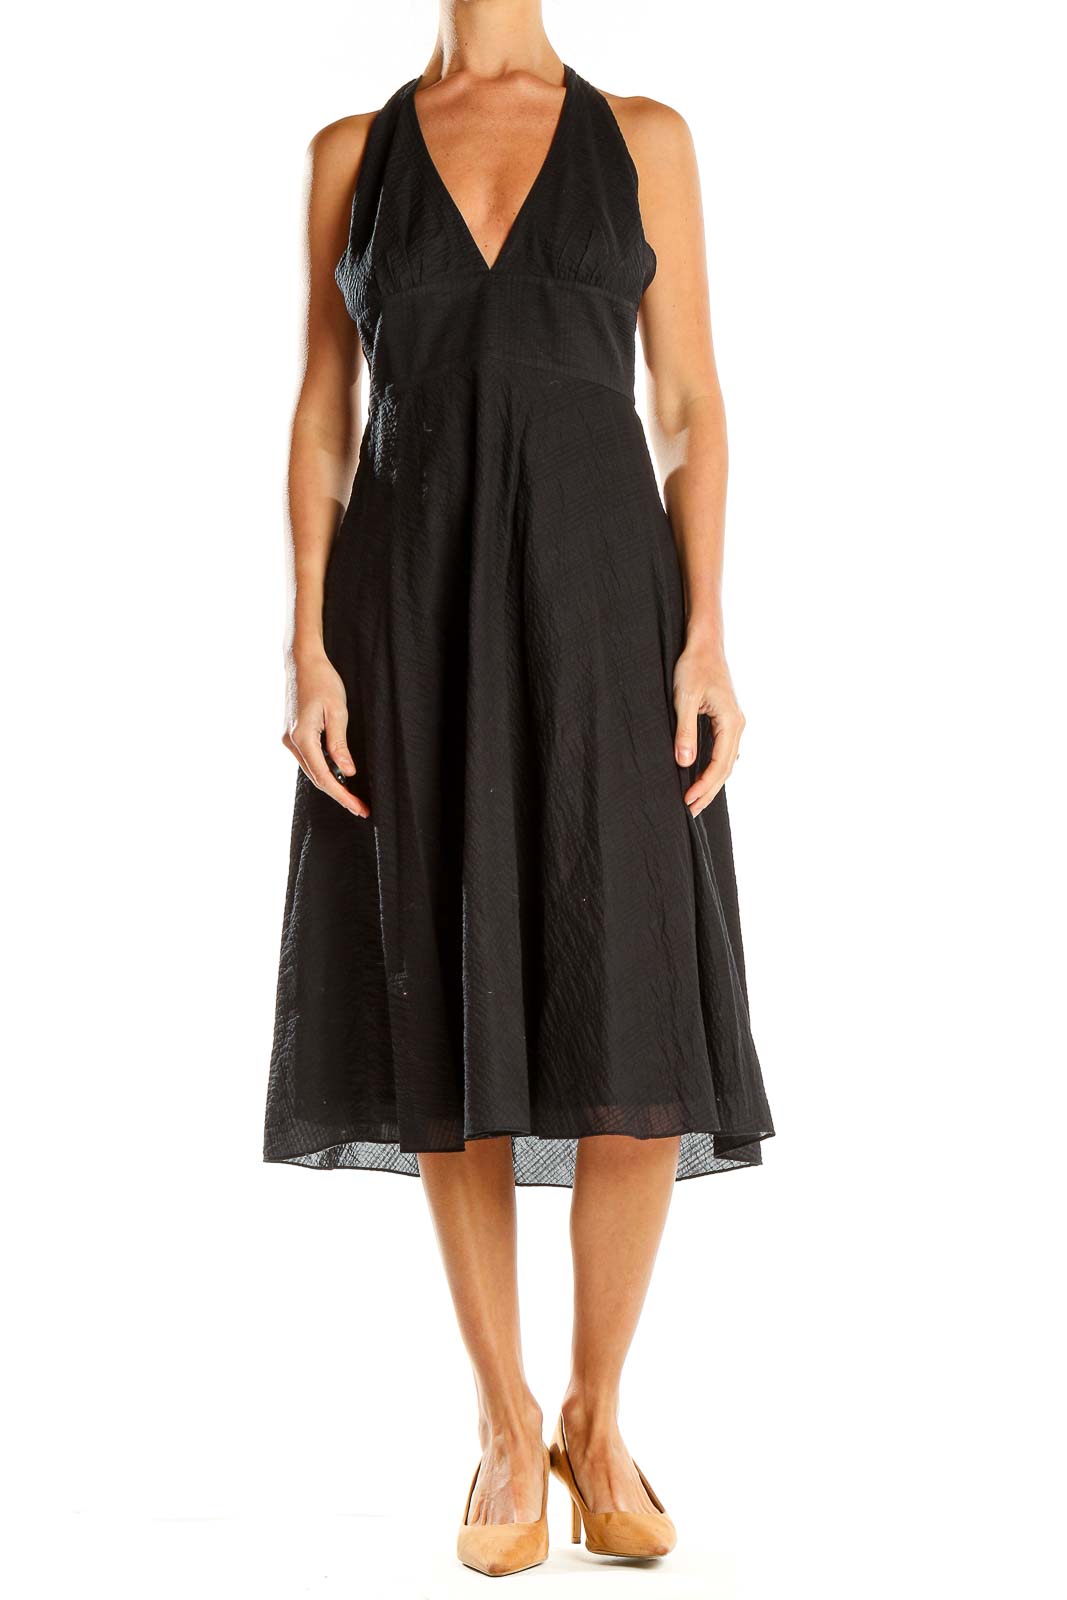 Black Classic Fit & Flare Cotton Halter Dress Front